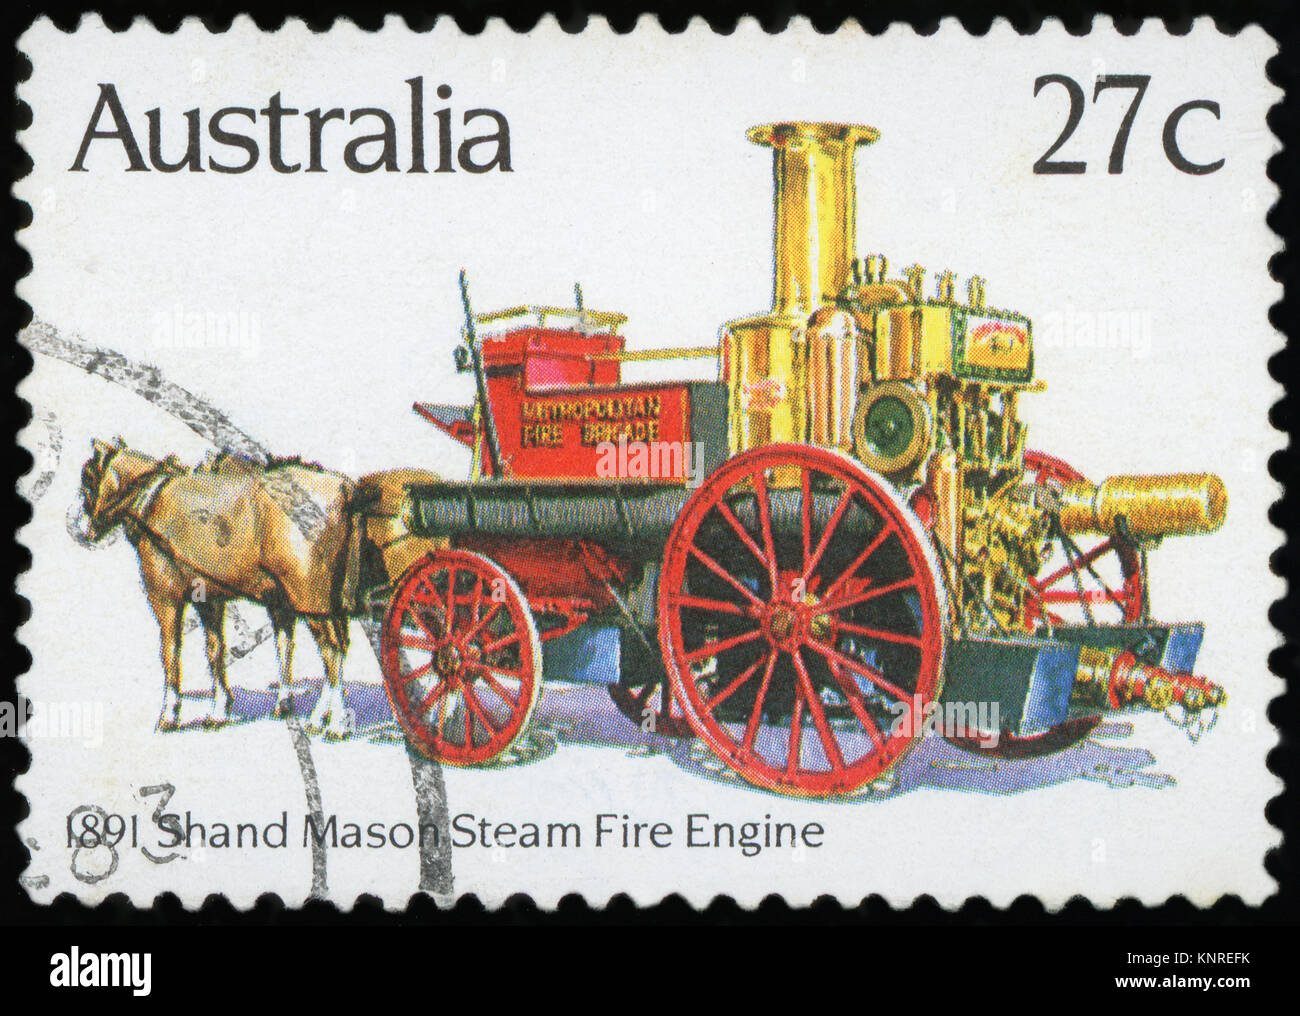 AUSTRALIA - CIRCA 1983: A stamp printed in Australia shows 1891 Shand Mason Steam Fire Engine, circa 1983 Stock Photo